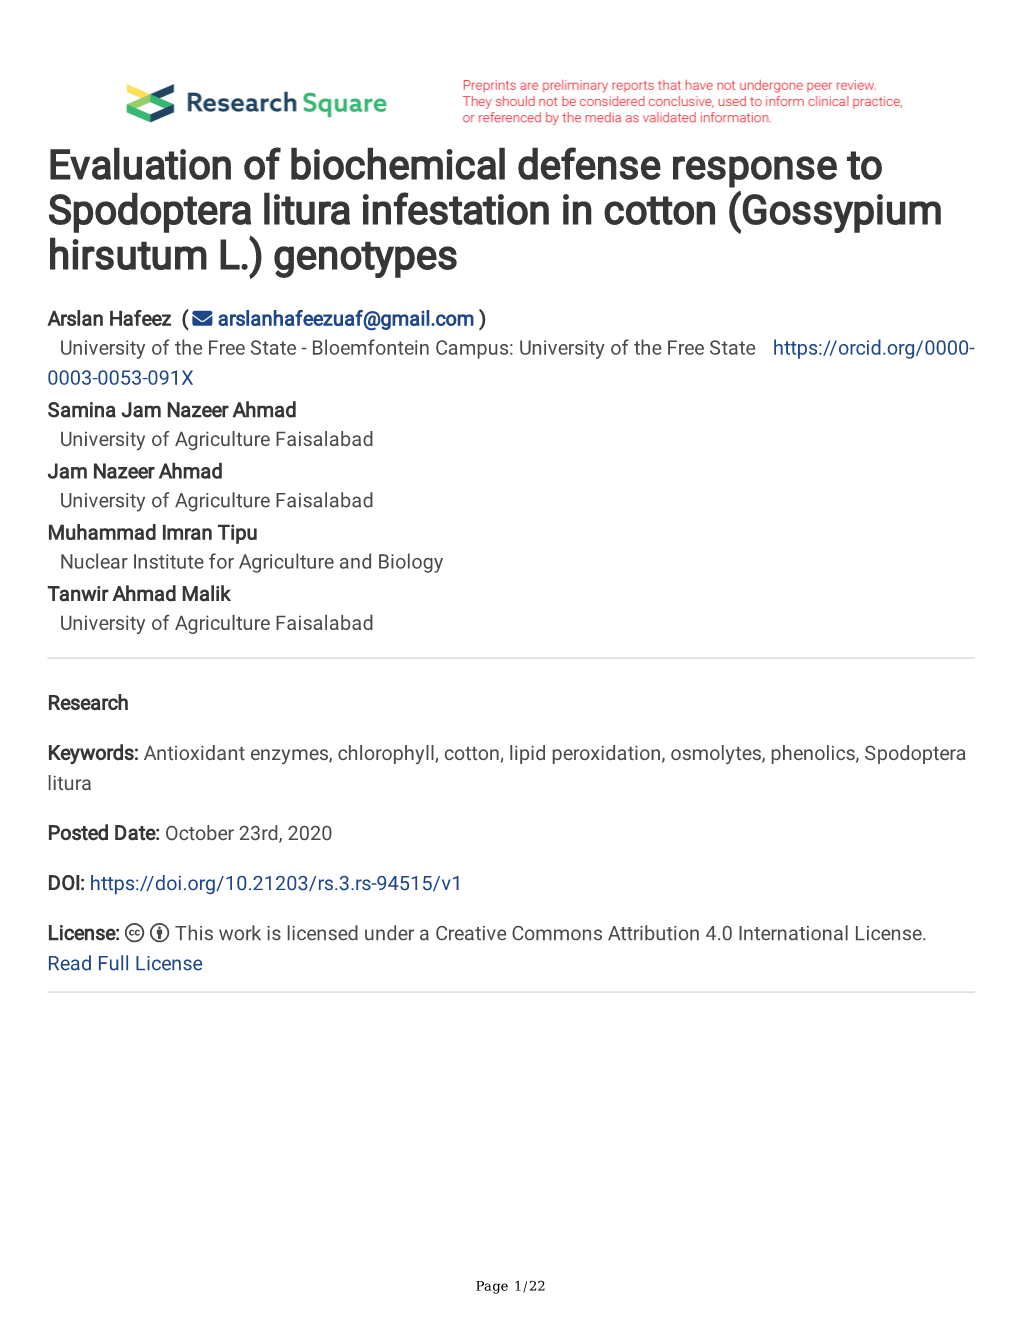 Evaluation of Biochemical Defense Response to Spodoptera Litura Infestation in Cotton (Gossypium Hirsutum L.) Genotypes